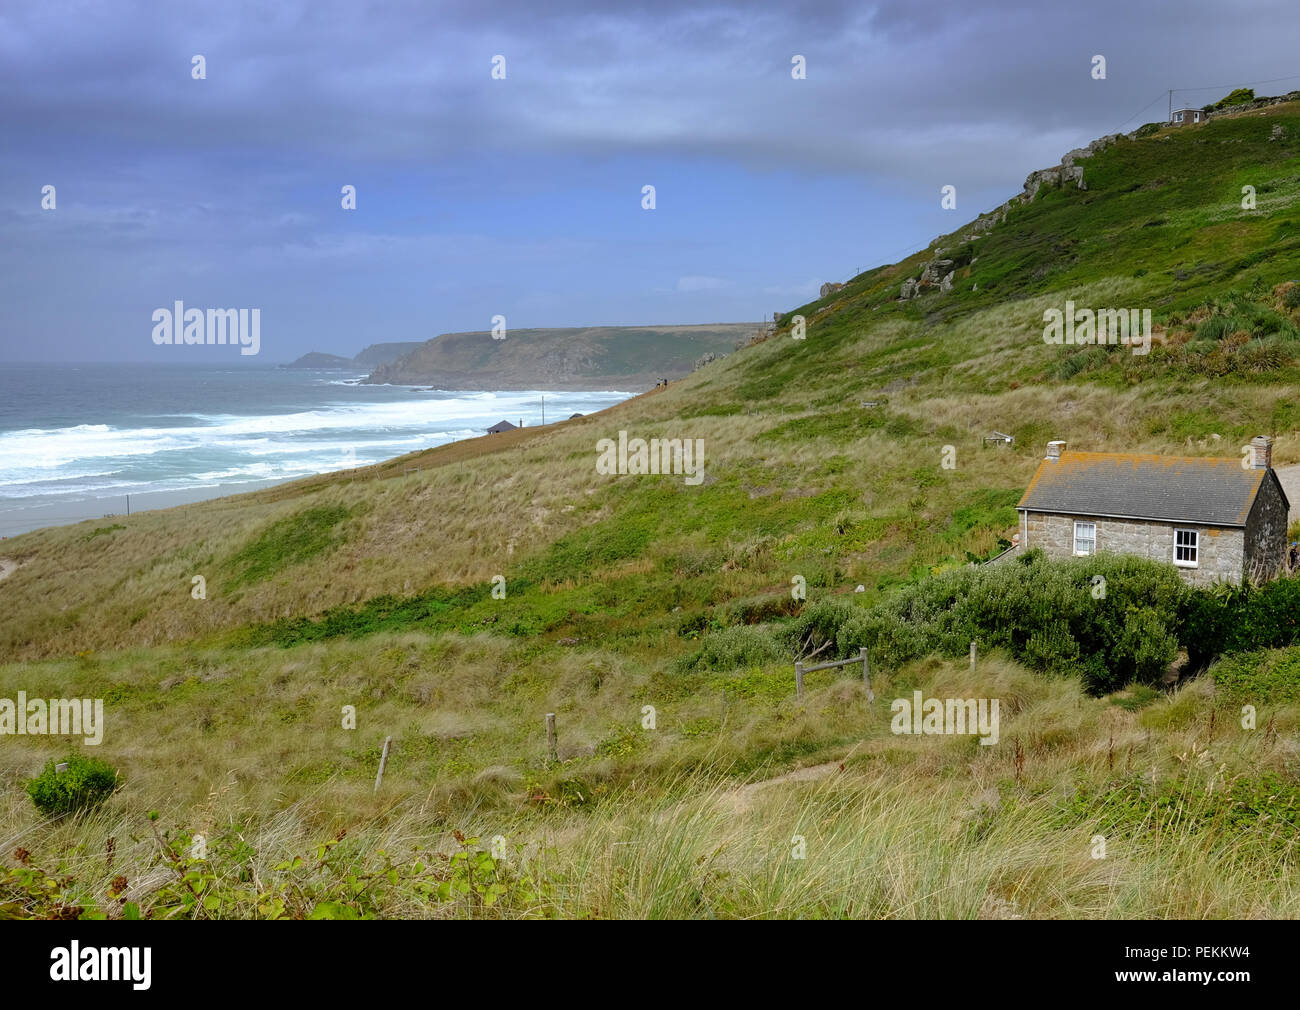 Casa solitaria en Whitesand Bay, Cornwall Foto de stock